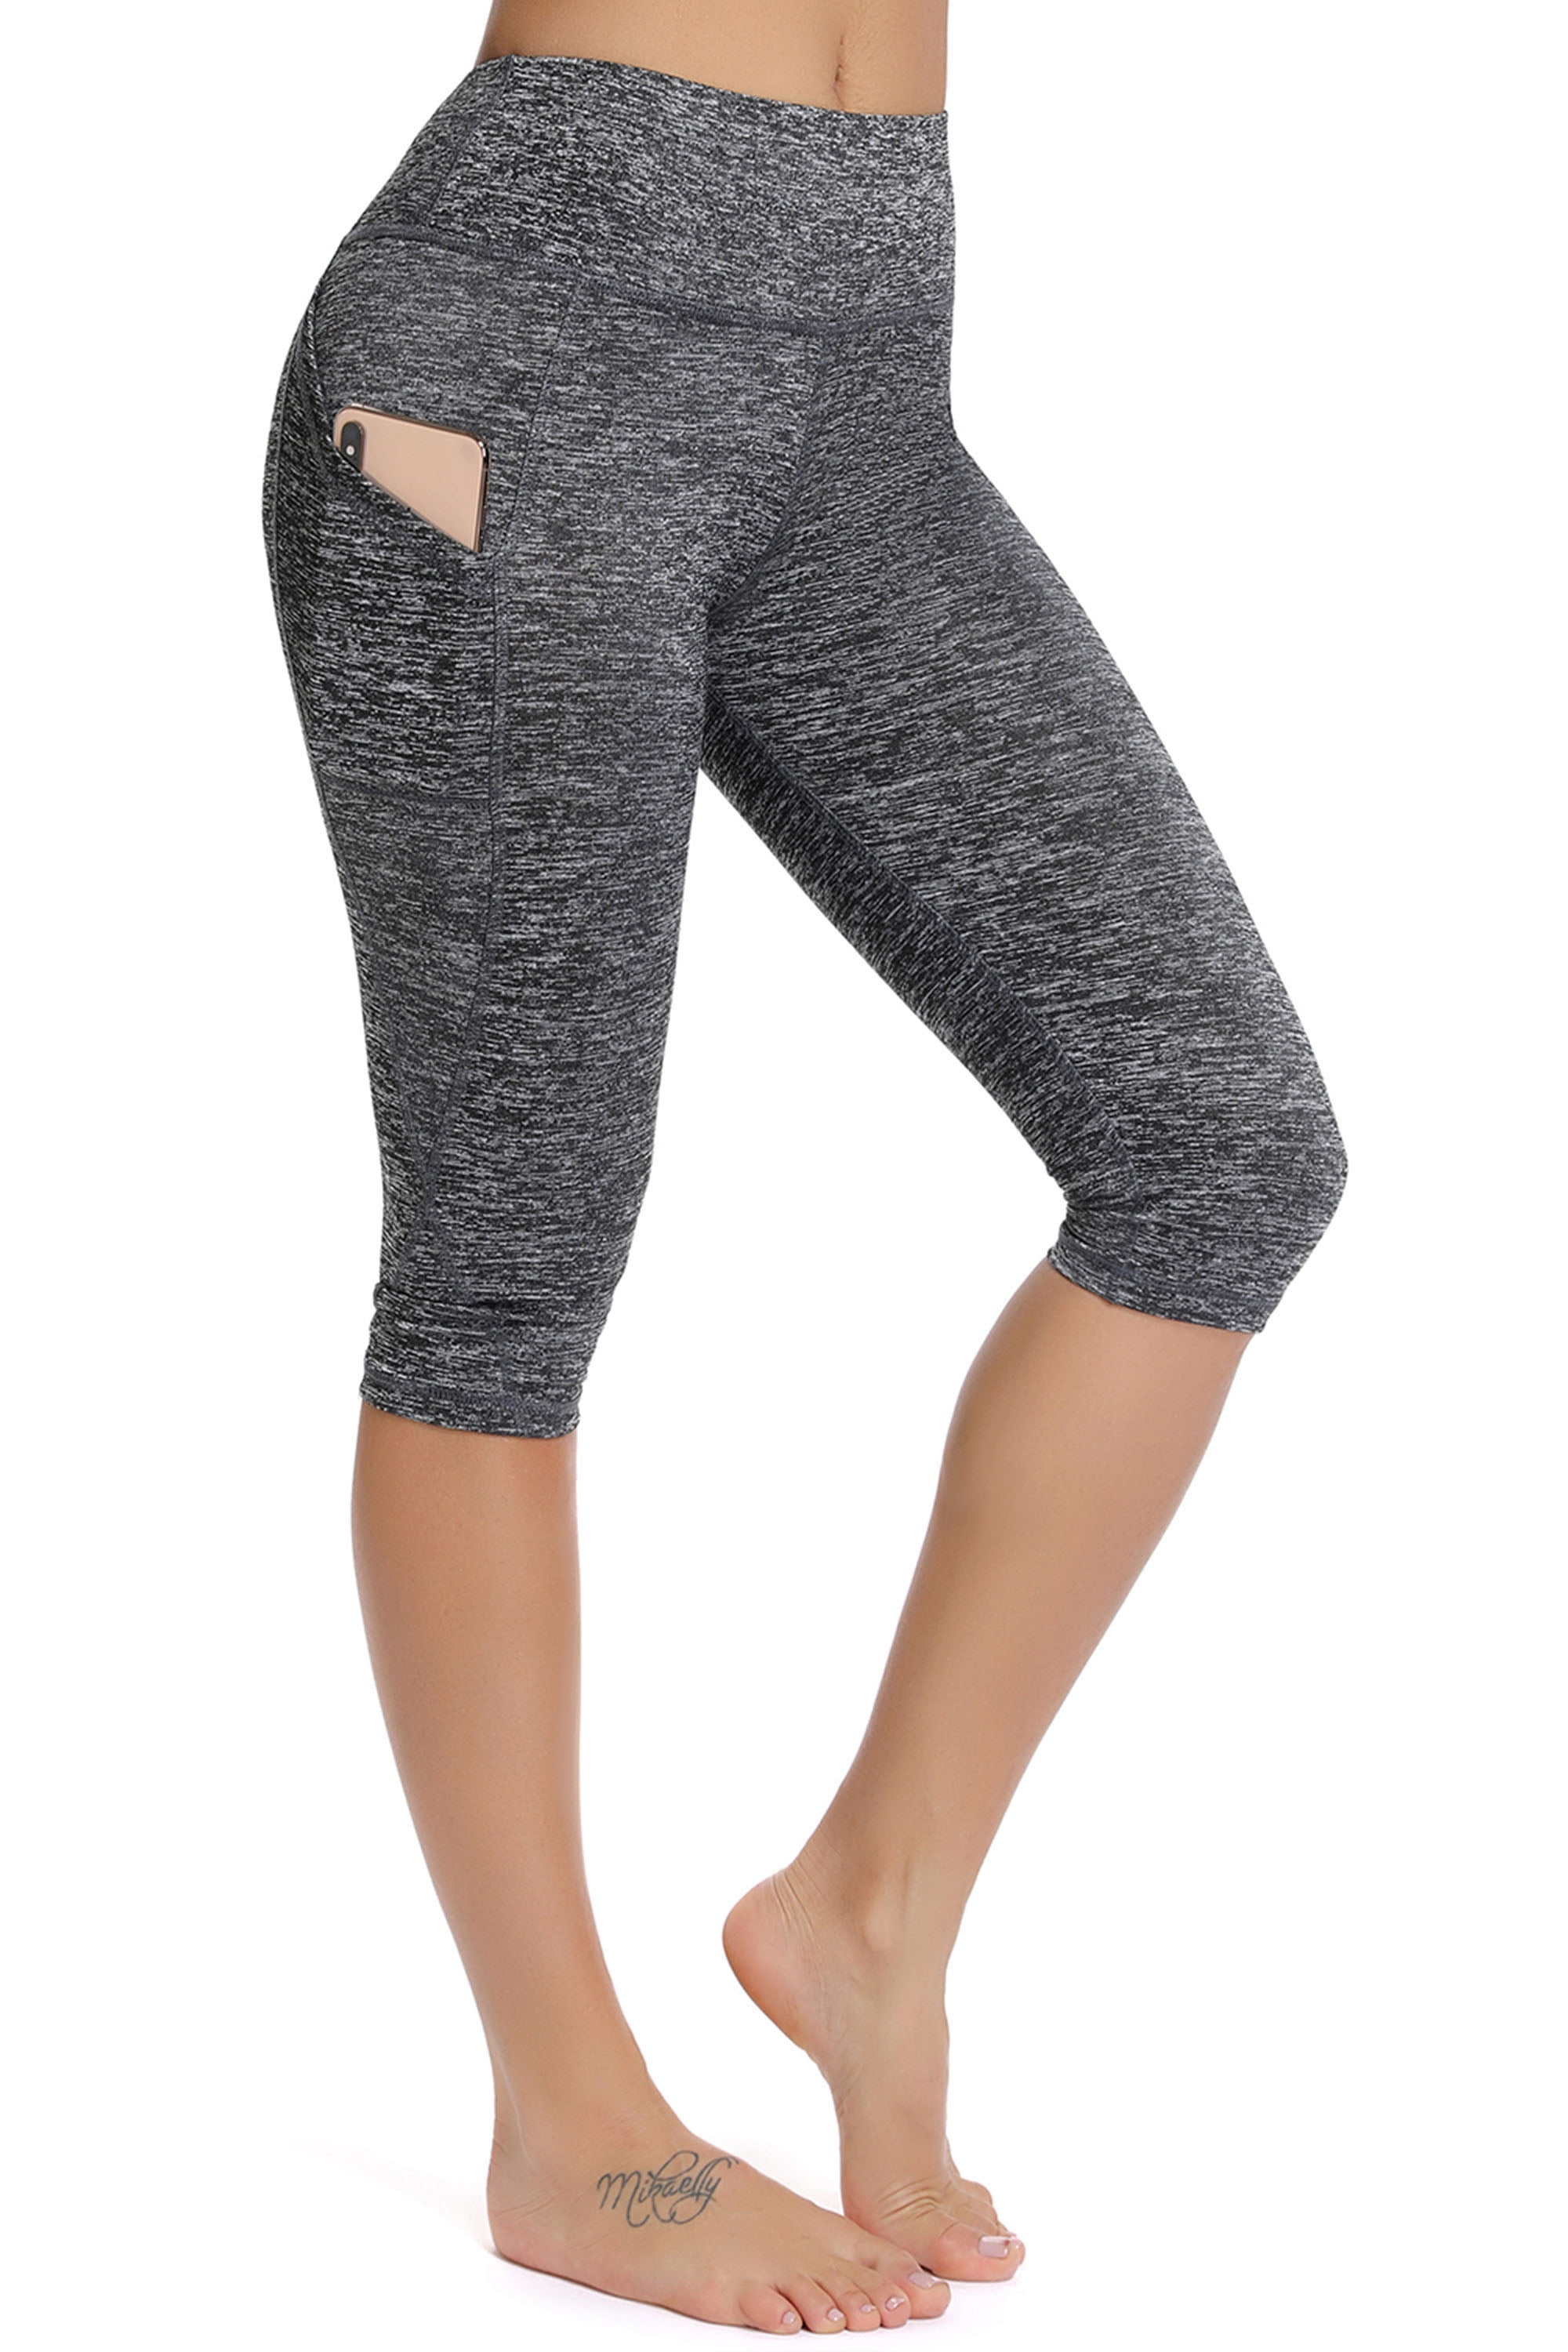 19 Inseam Yoga Leggings with Back Pockets Black Medium ODODOS Women's High Waisted Tummy Control Mesh Workout Capris 